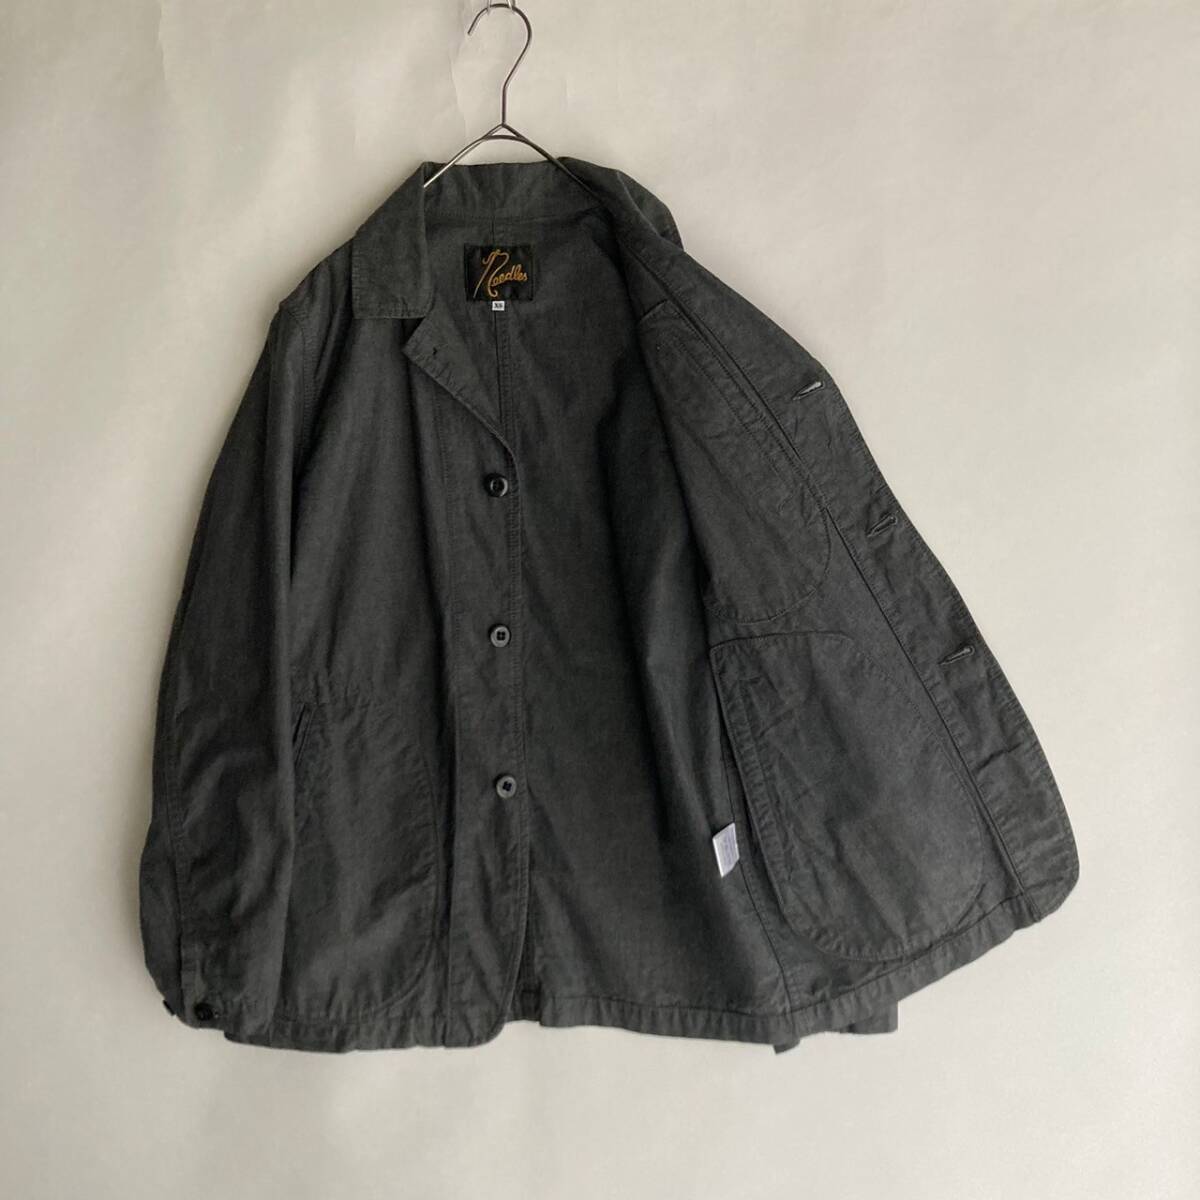 Needles Needles made in Japan Work jacket Arrow jacket cotton ×linen black car n blur - charcoal gray size XS sk